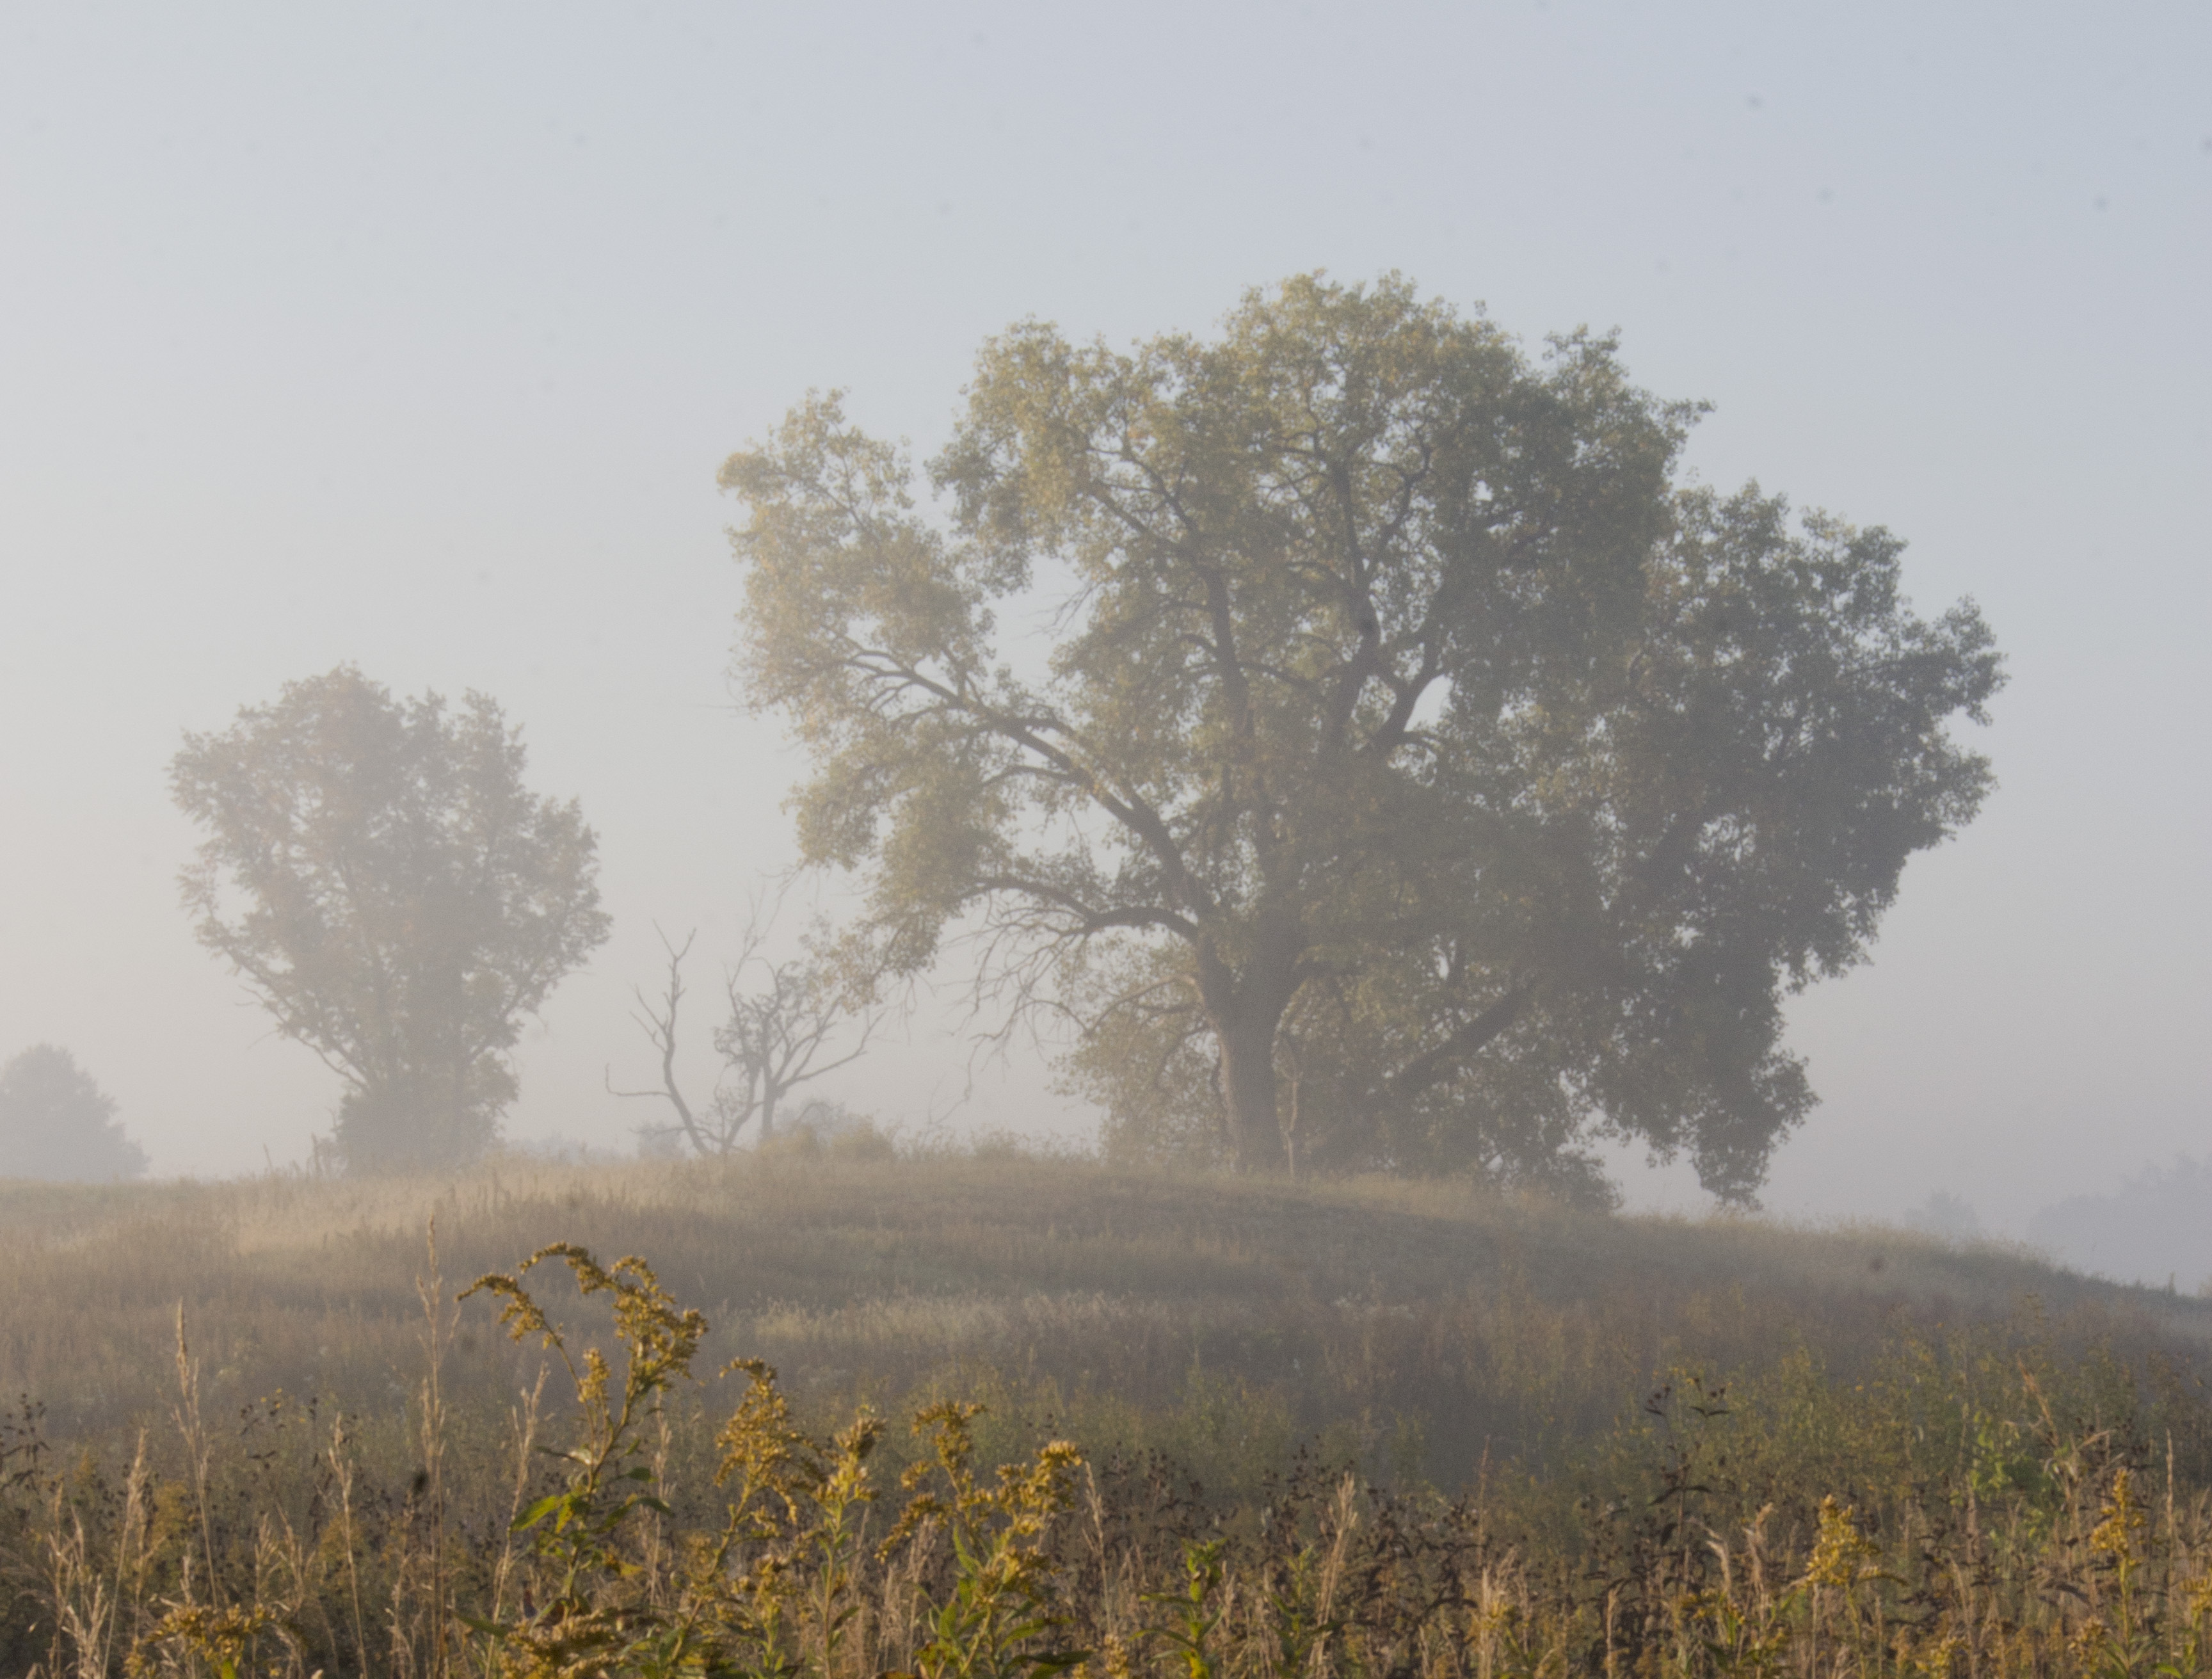 Trees in a foggy field